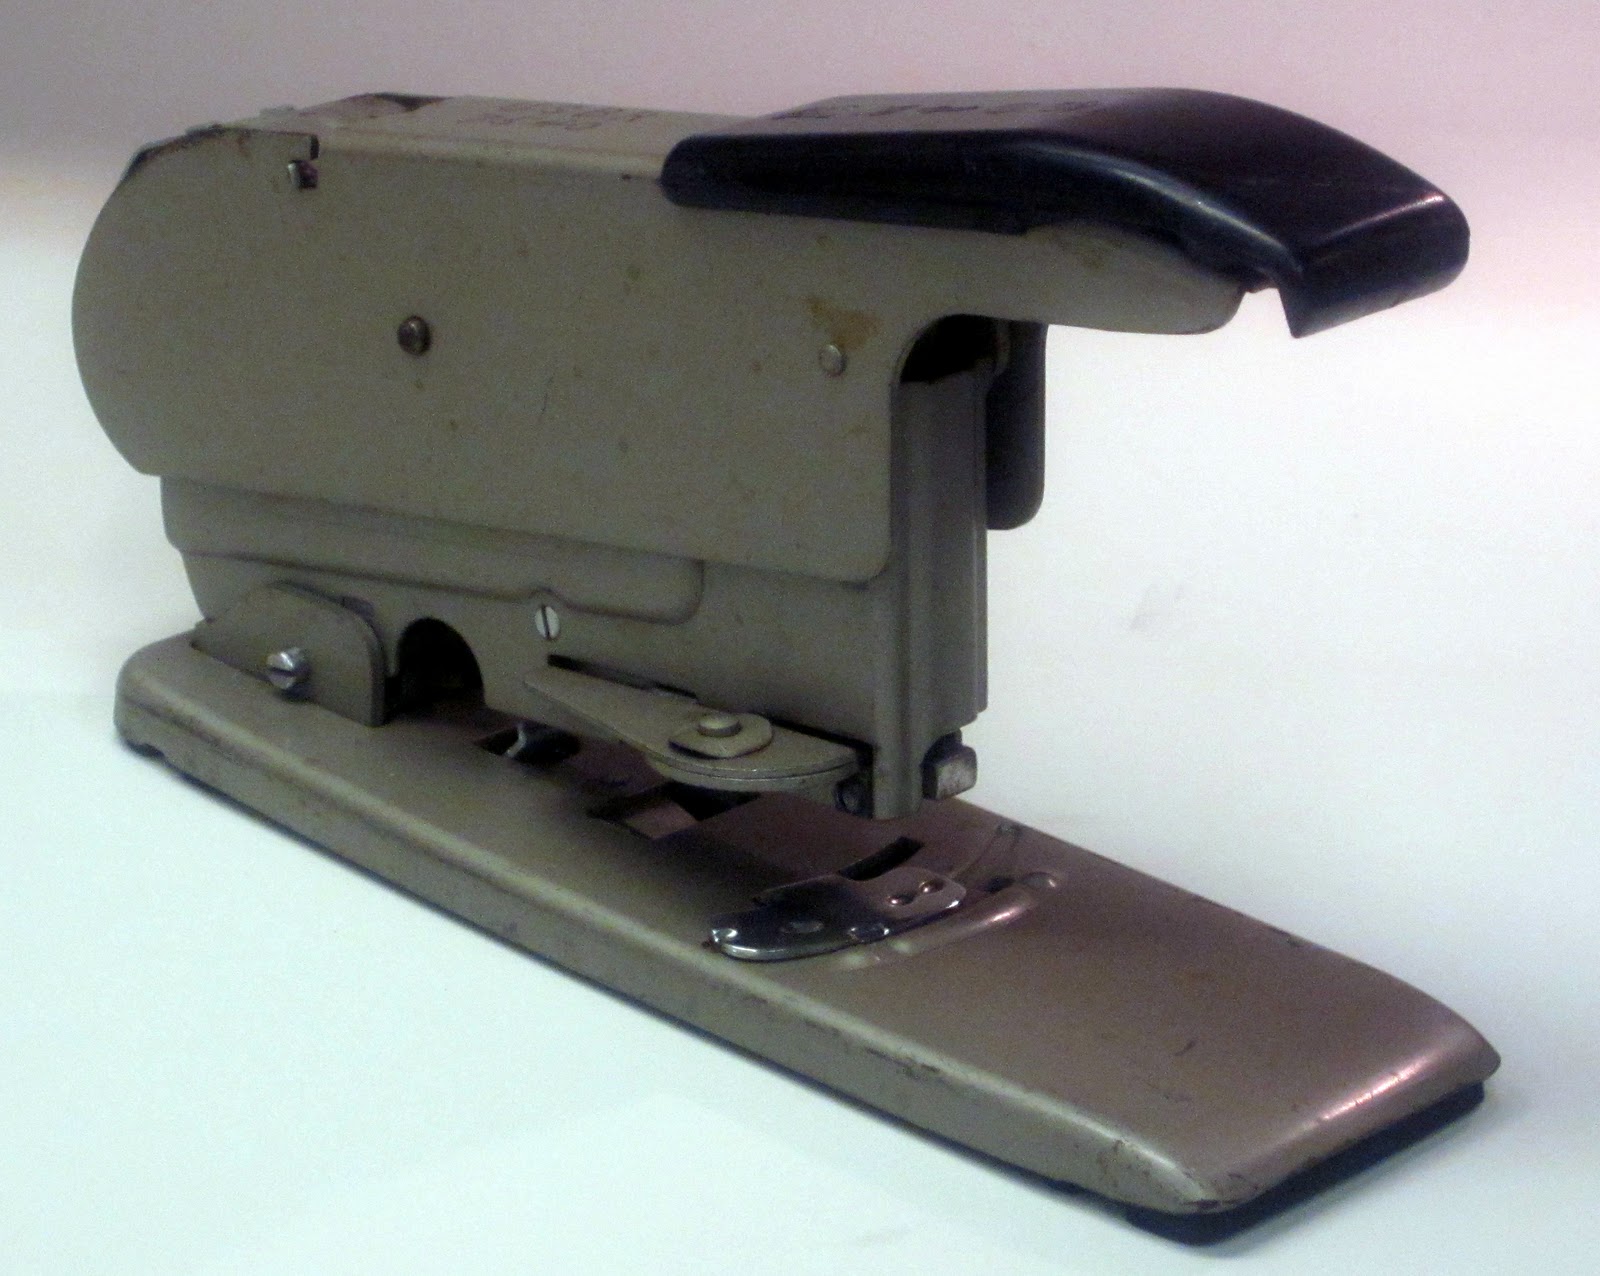 MI Vintage Sewing Machines: Other Vintage Stuff